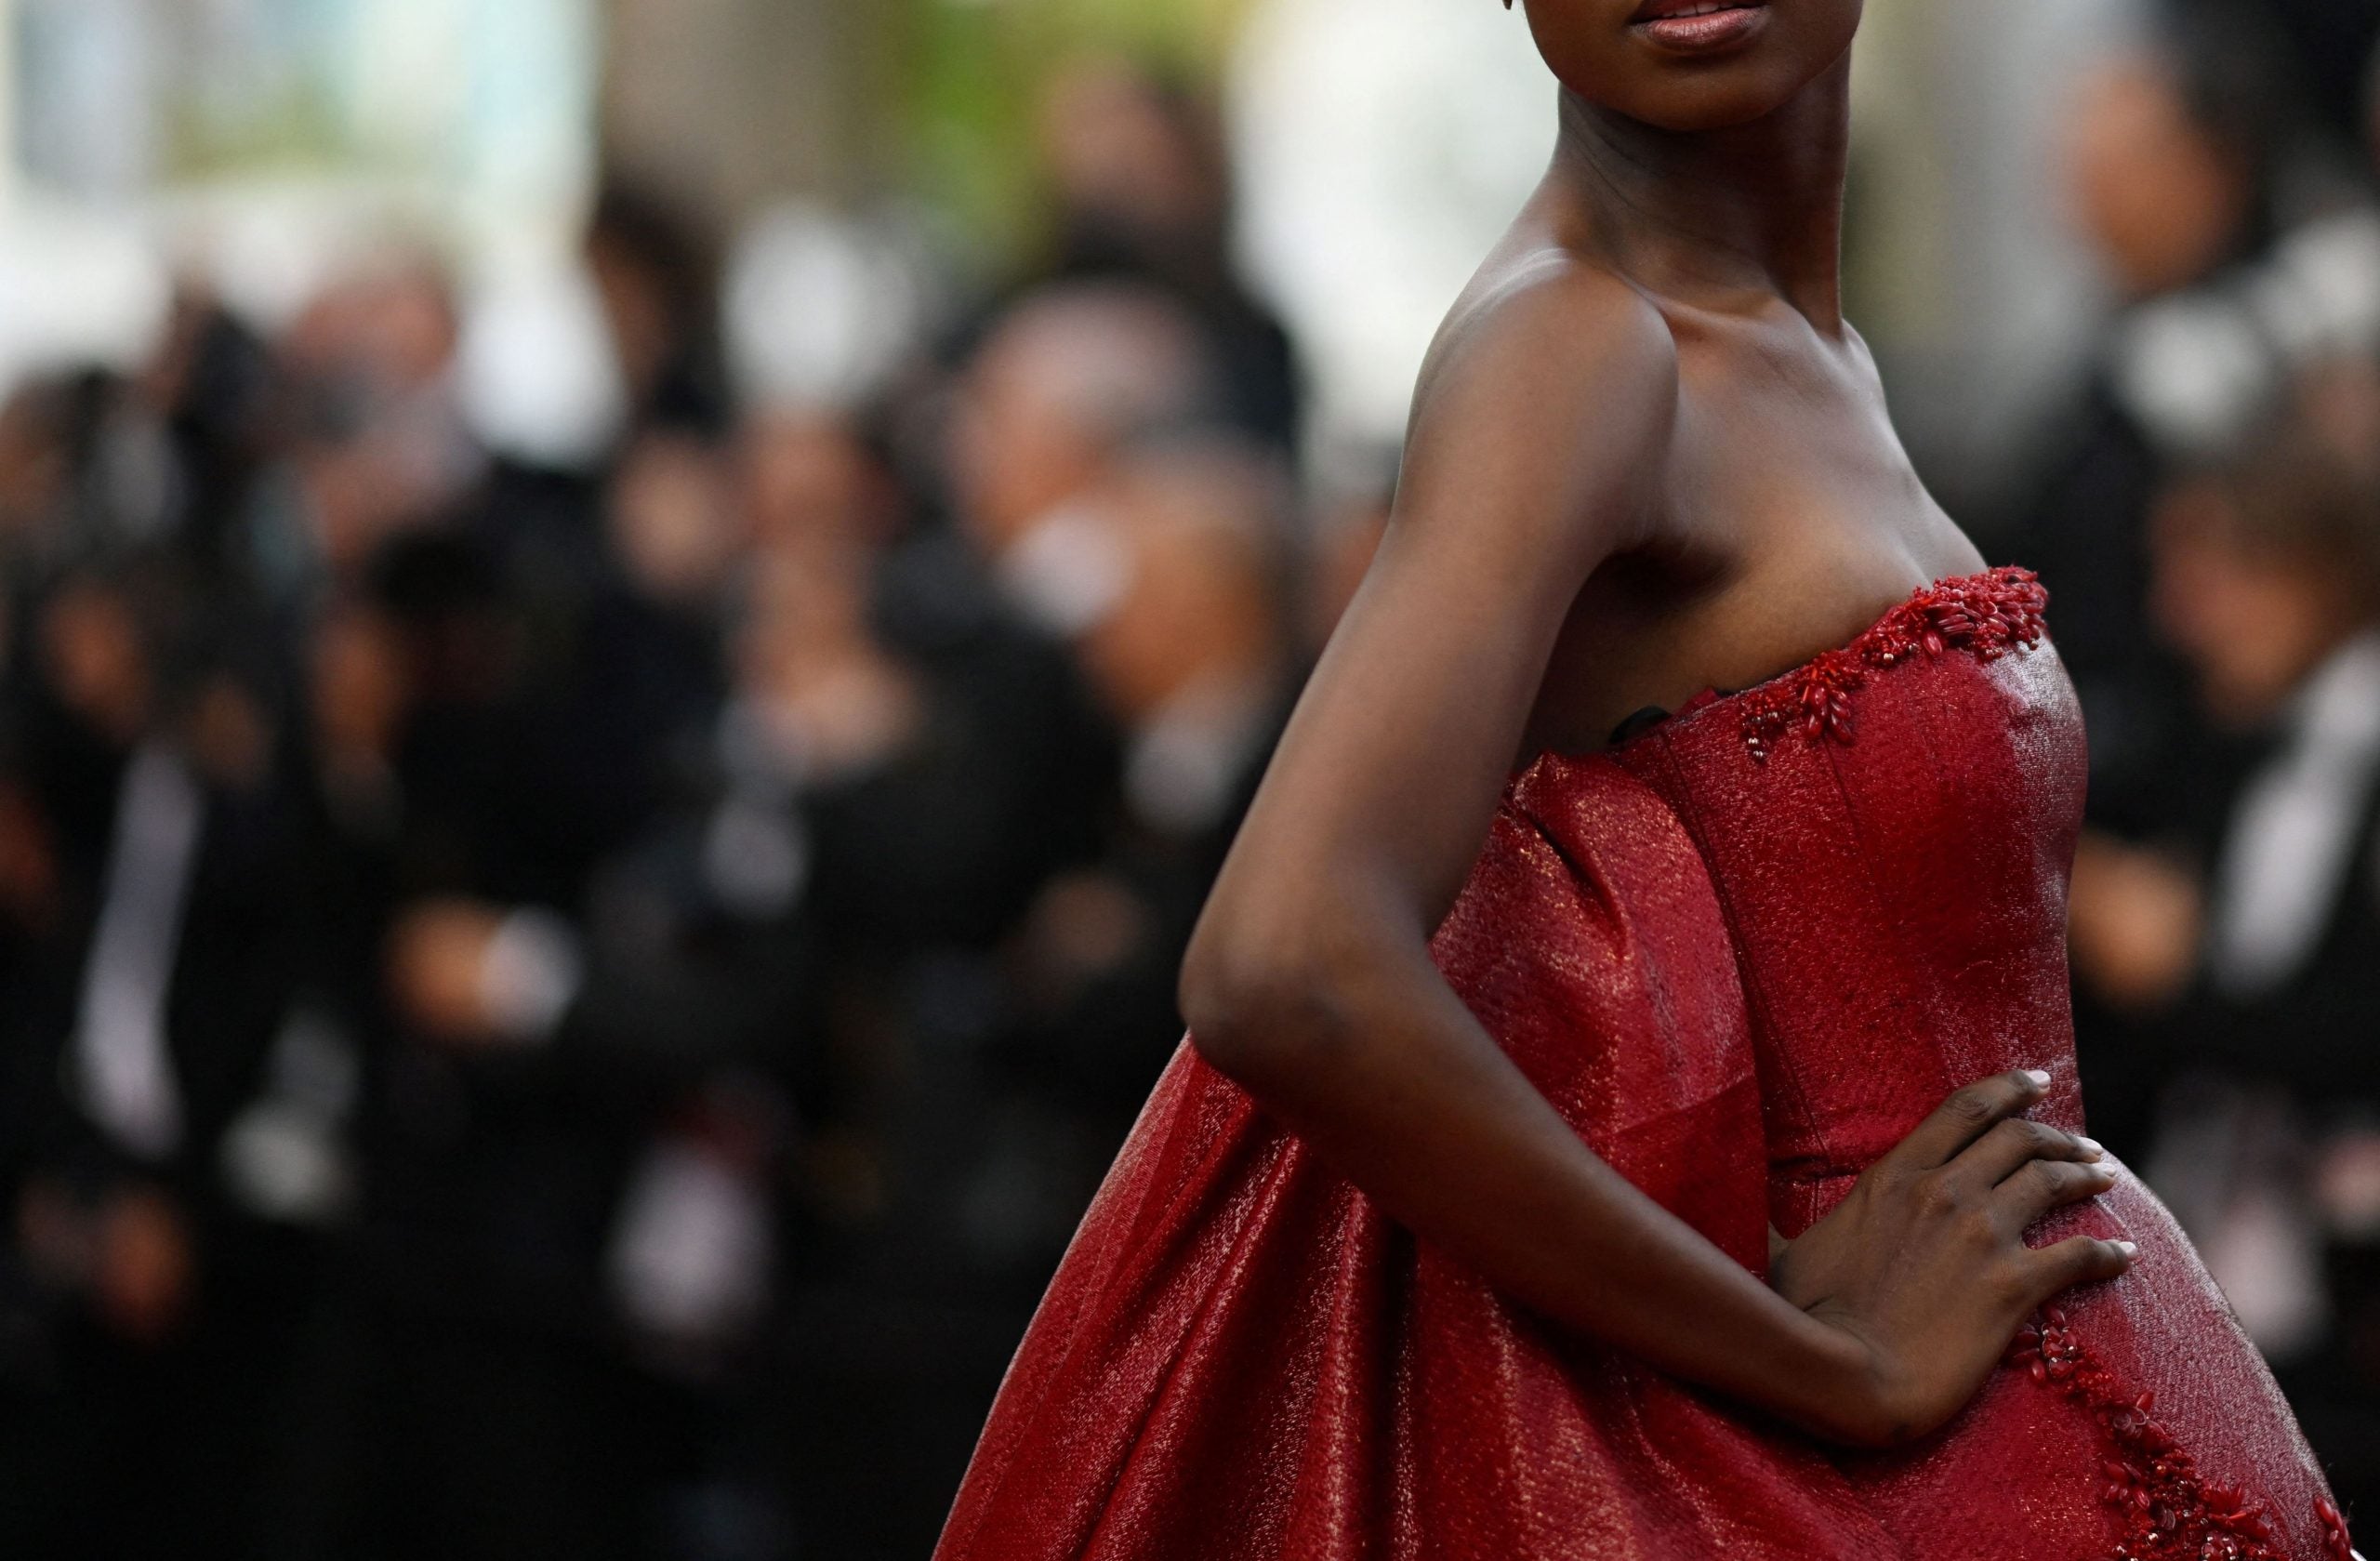 Black At Cannes: Critic Valerie Complex Details Experiencing Constant Racism At Film Festival